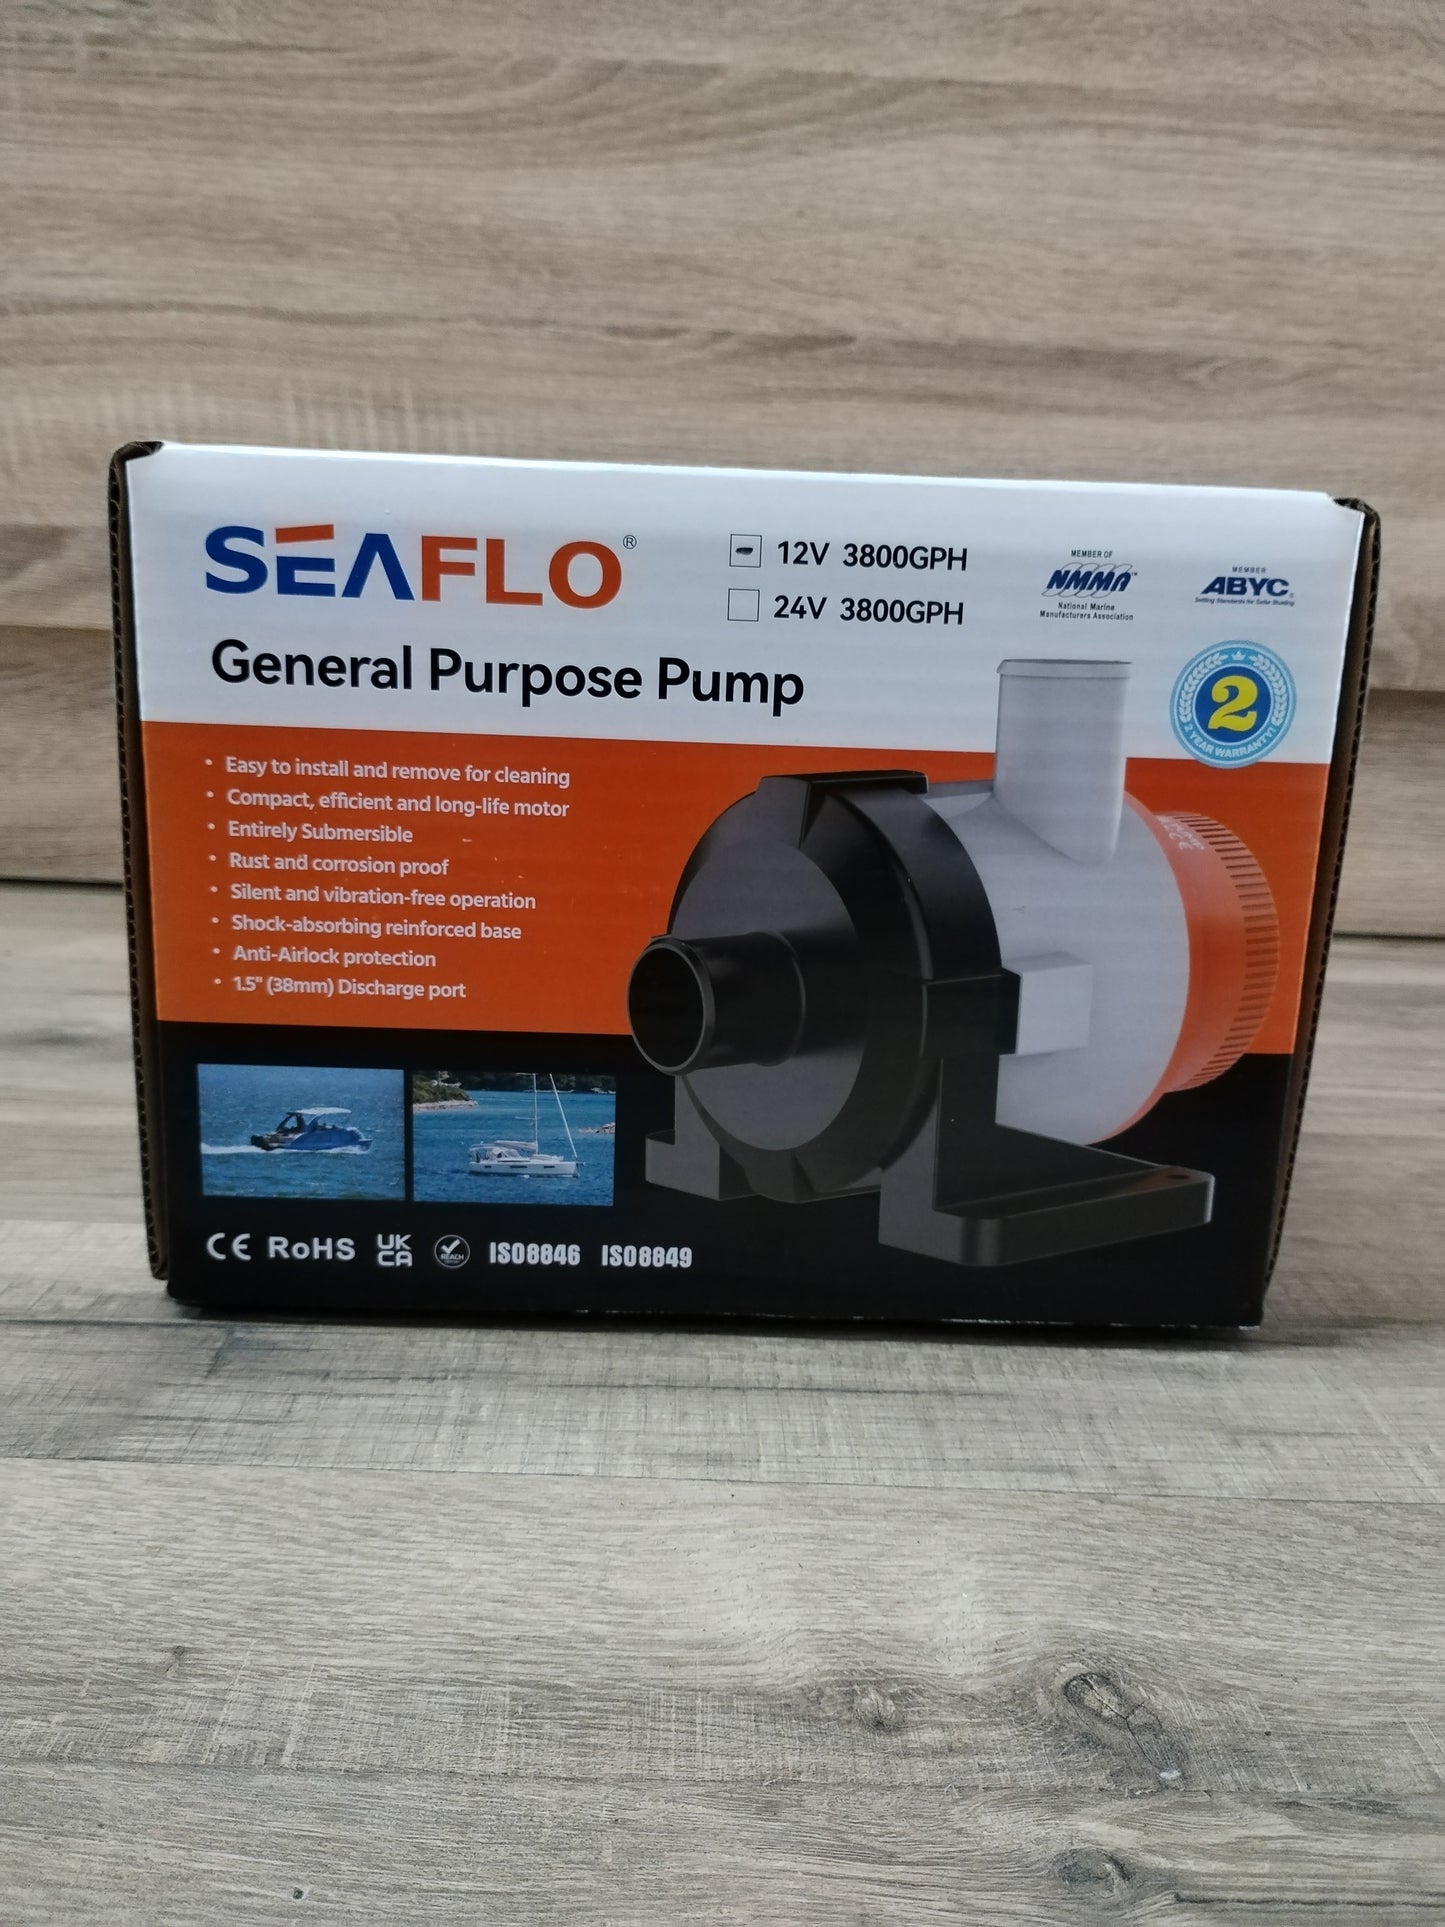 Seaflo General Purpose Pump (3800GPH)